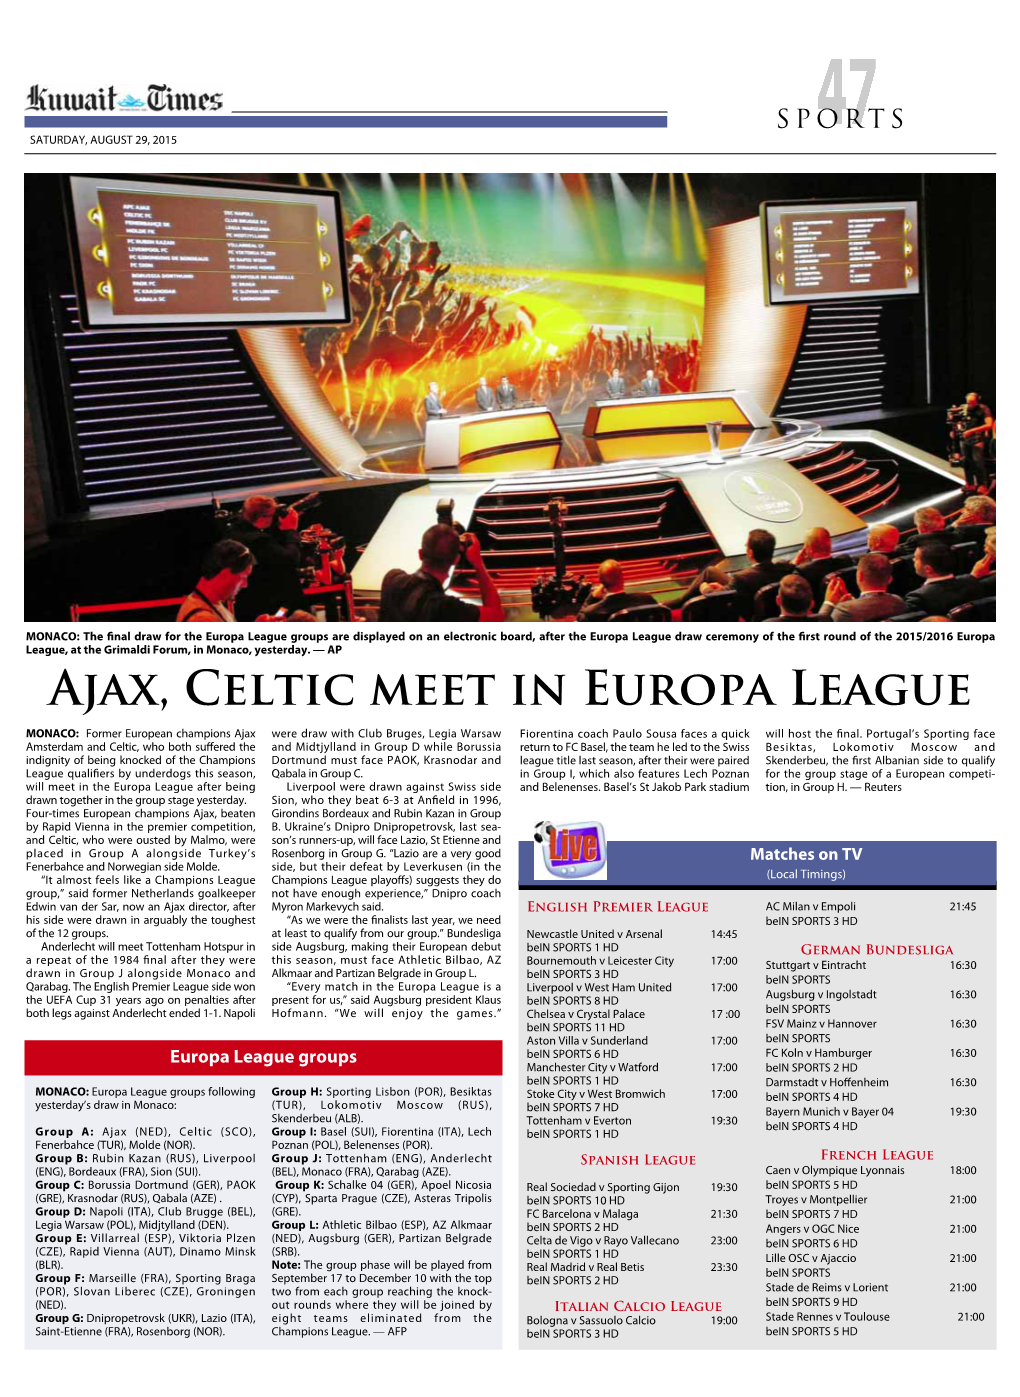 Ajax, Celtic Meet in Europa League